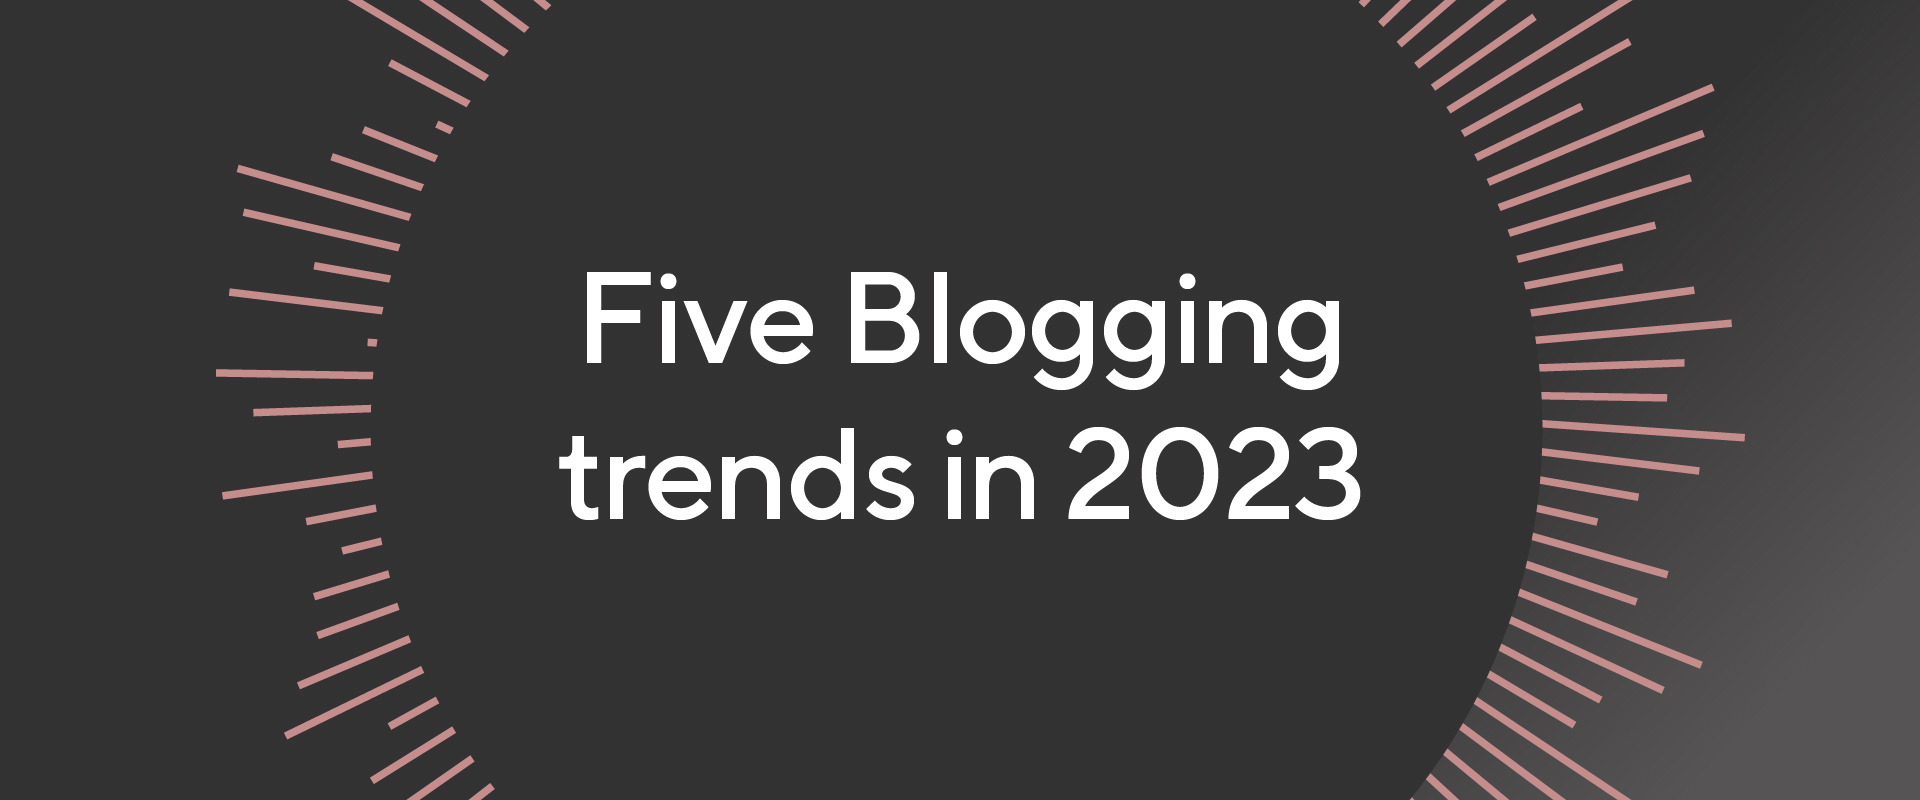 Blogging trends in 2023